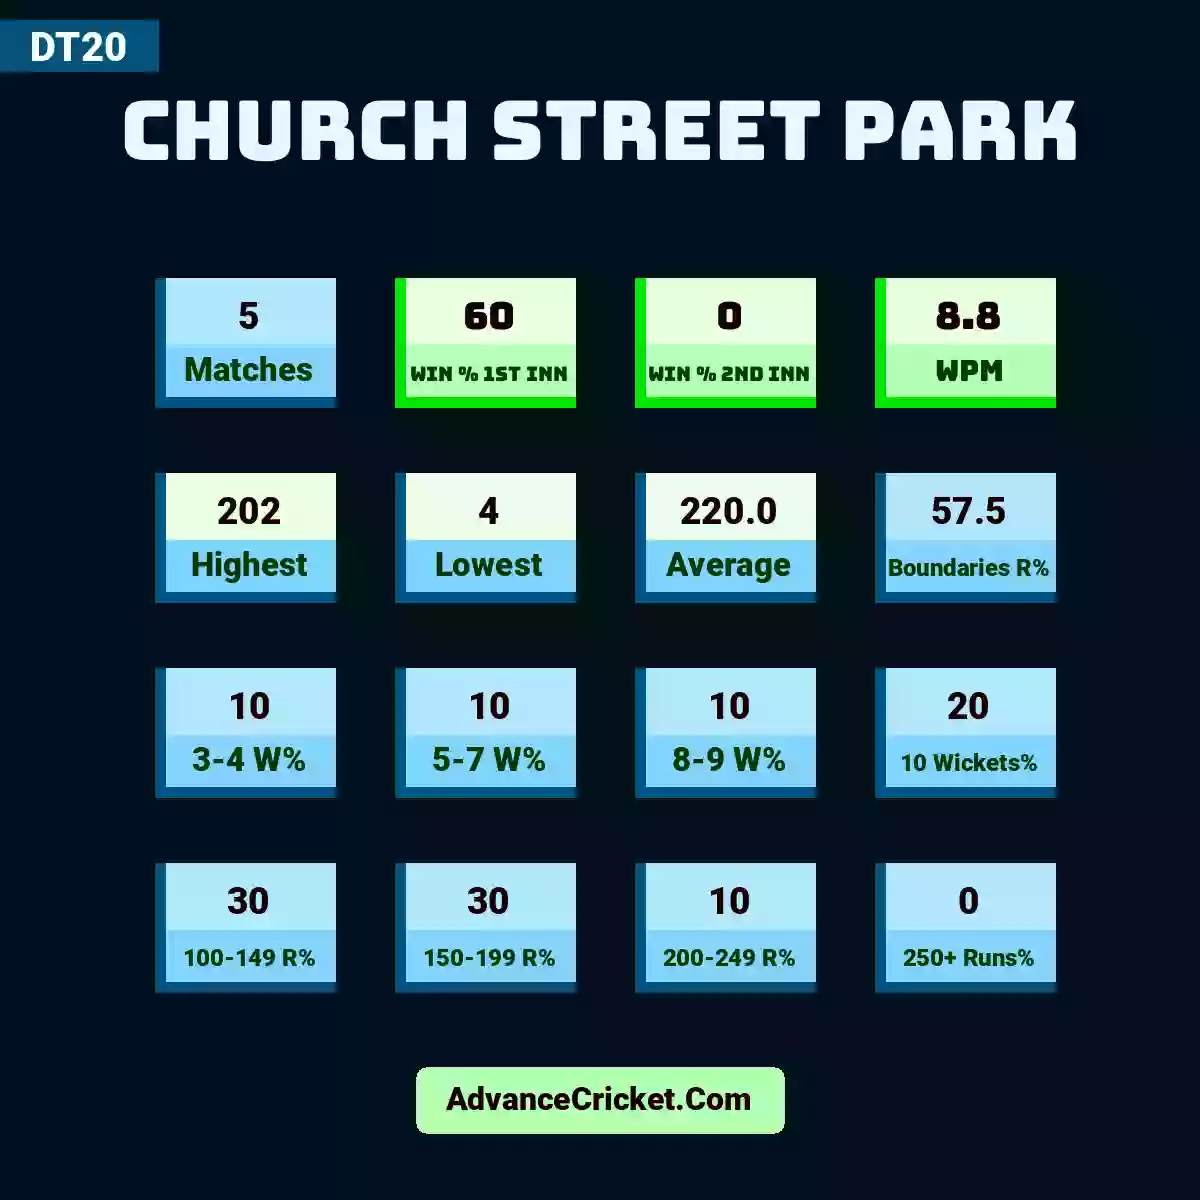 Image showing Church Street Park with Matches: 5, Win % 1st Inn: 60, Win % 2nd Inn: 0, WPM: 8.8, Highest: 202, Lowest: 4, Average: 220.0, Boundaries R%: 57.5, 3-4 W%: 10, 5-7 W%: 10, 8-9 W%: 10, 10 Wickets%: 20, 100-149 R%: 30, 150-199 R%: 30, 200-249 R%: 10, 250+ Runs%: 0.